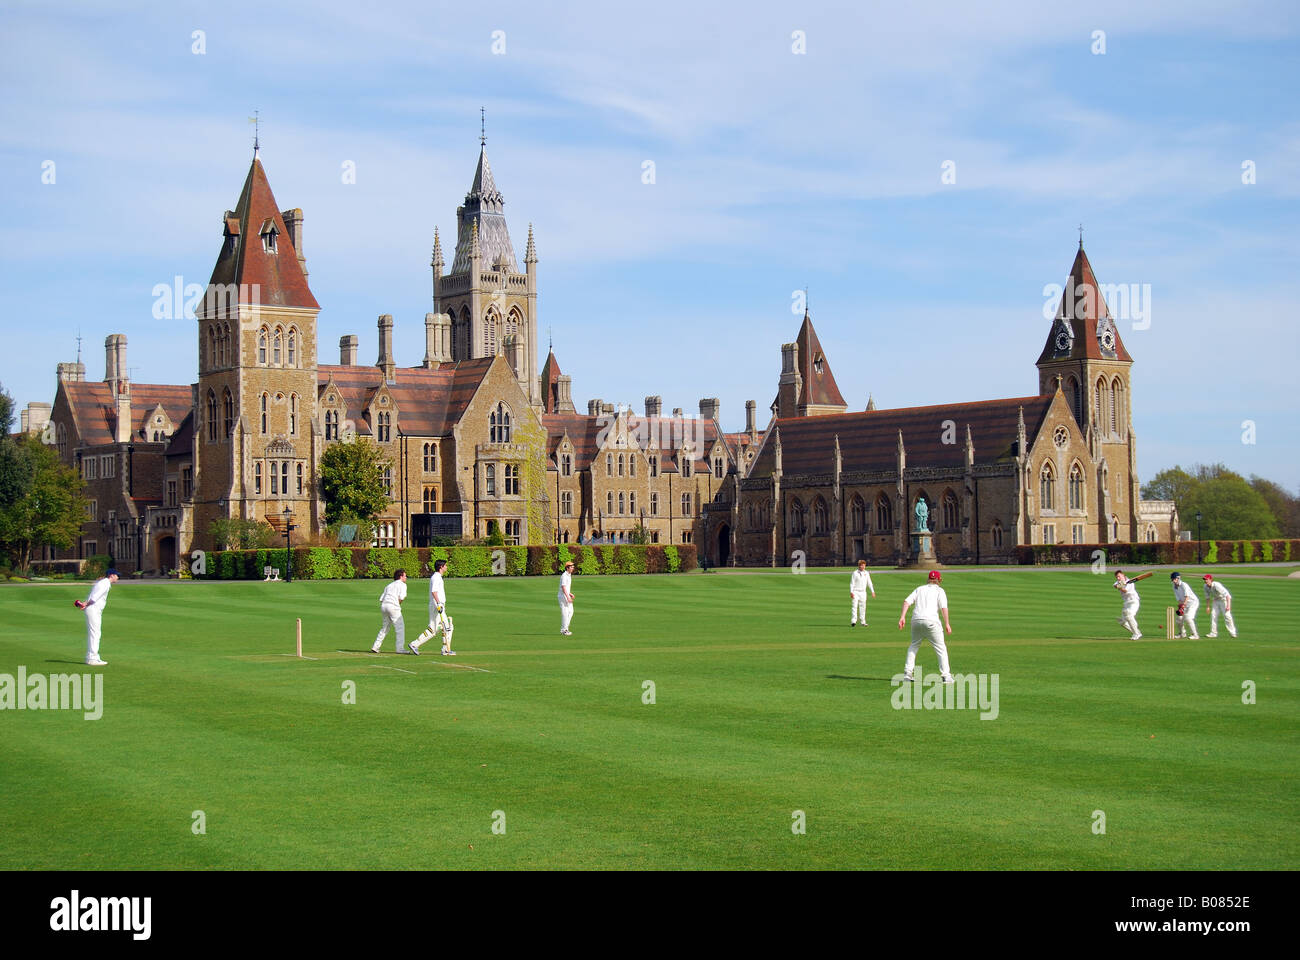 Match de cricket, Charterhouse School, Godalming, Surrey, Angleterre, Royaume-Uni Banque D'Images